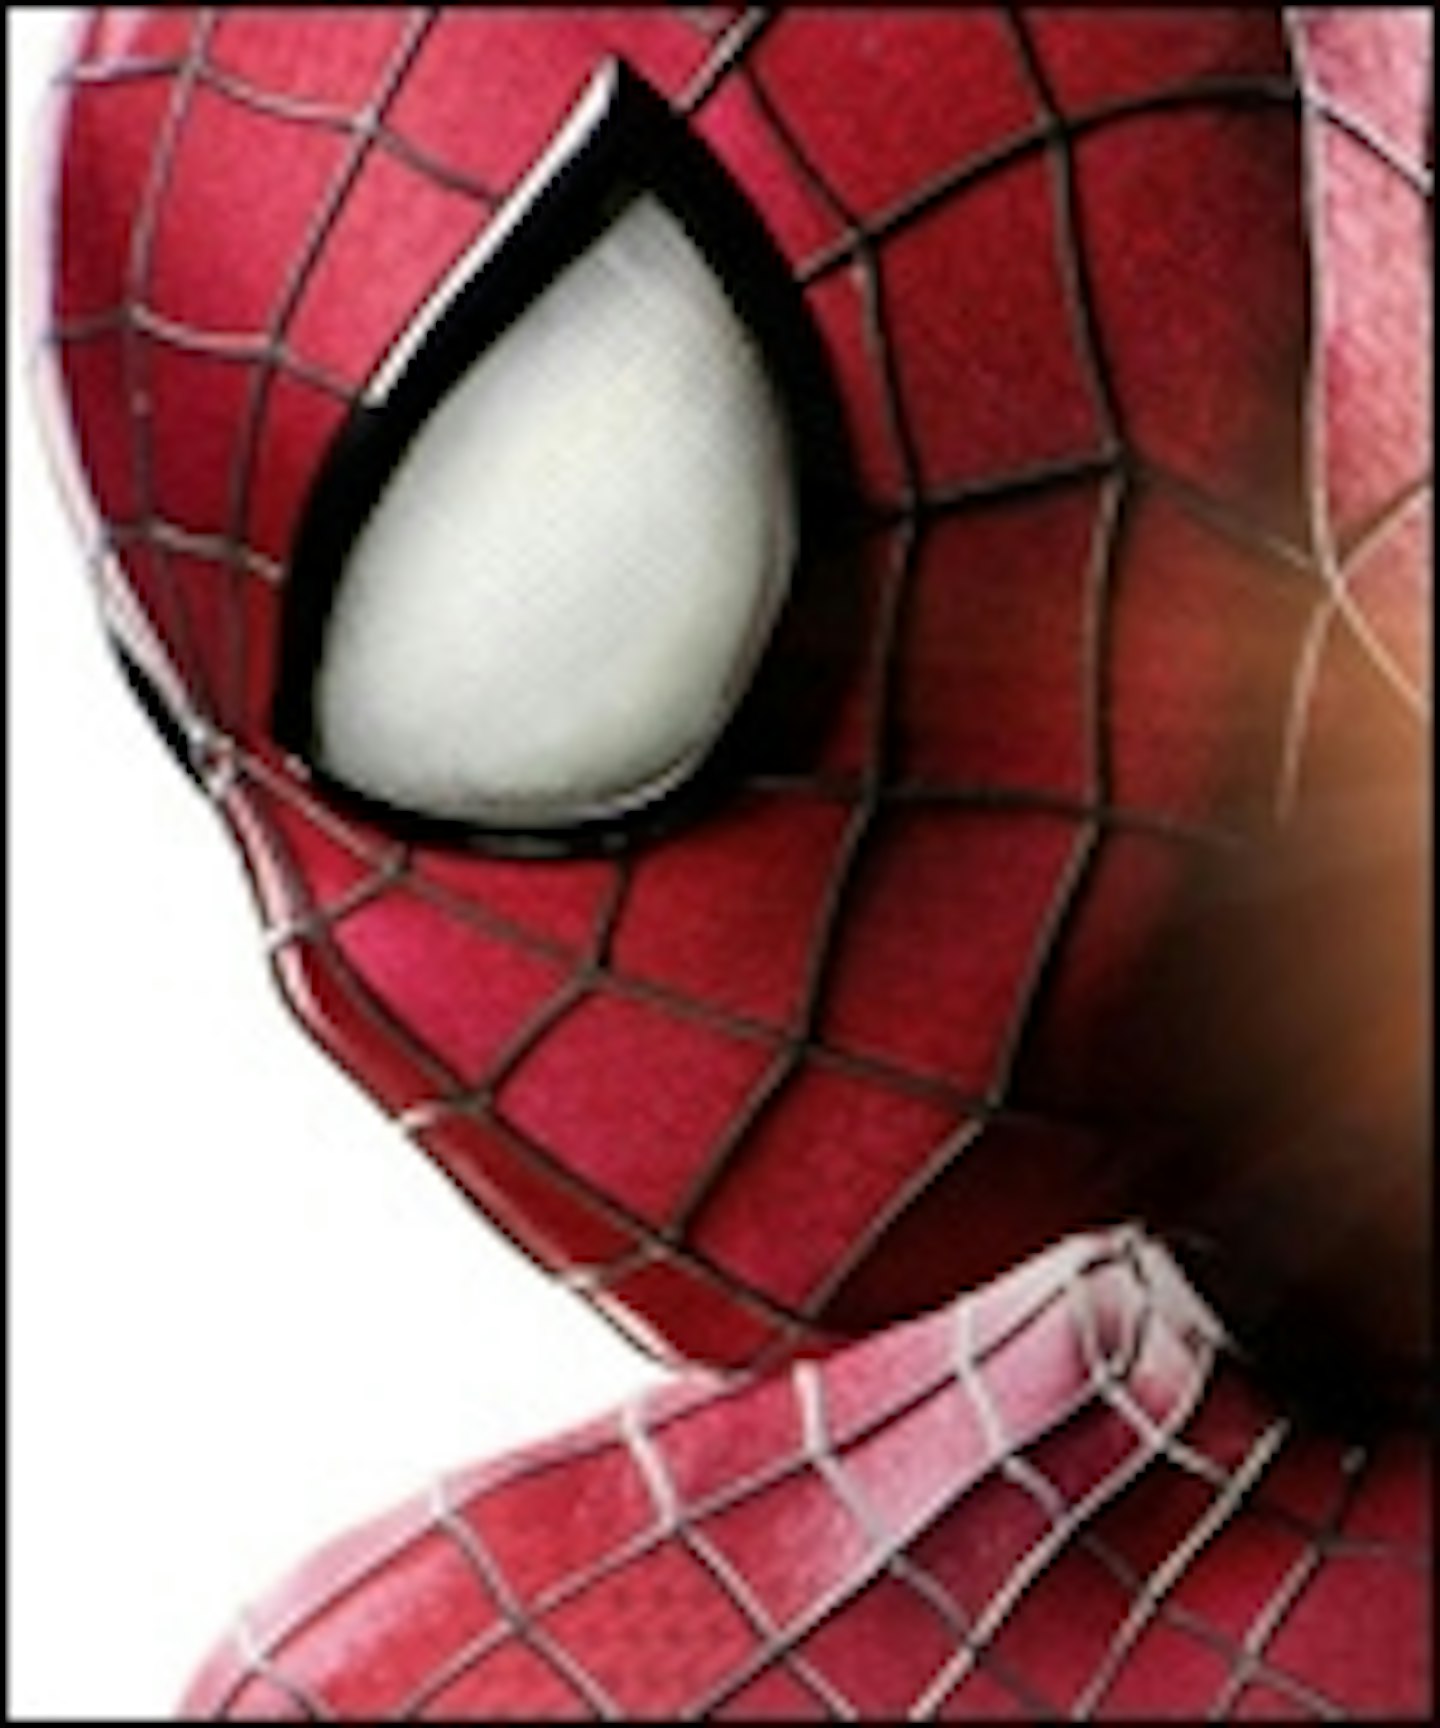 Latest Amazing Spider-Man 2 Trailer Gets Supersized